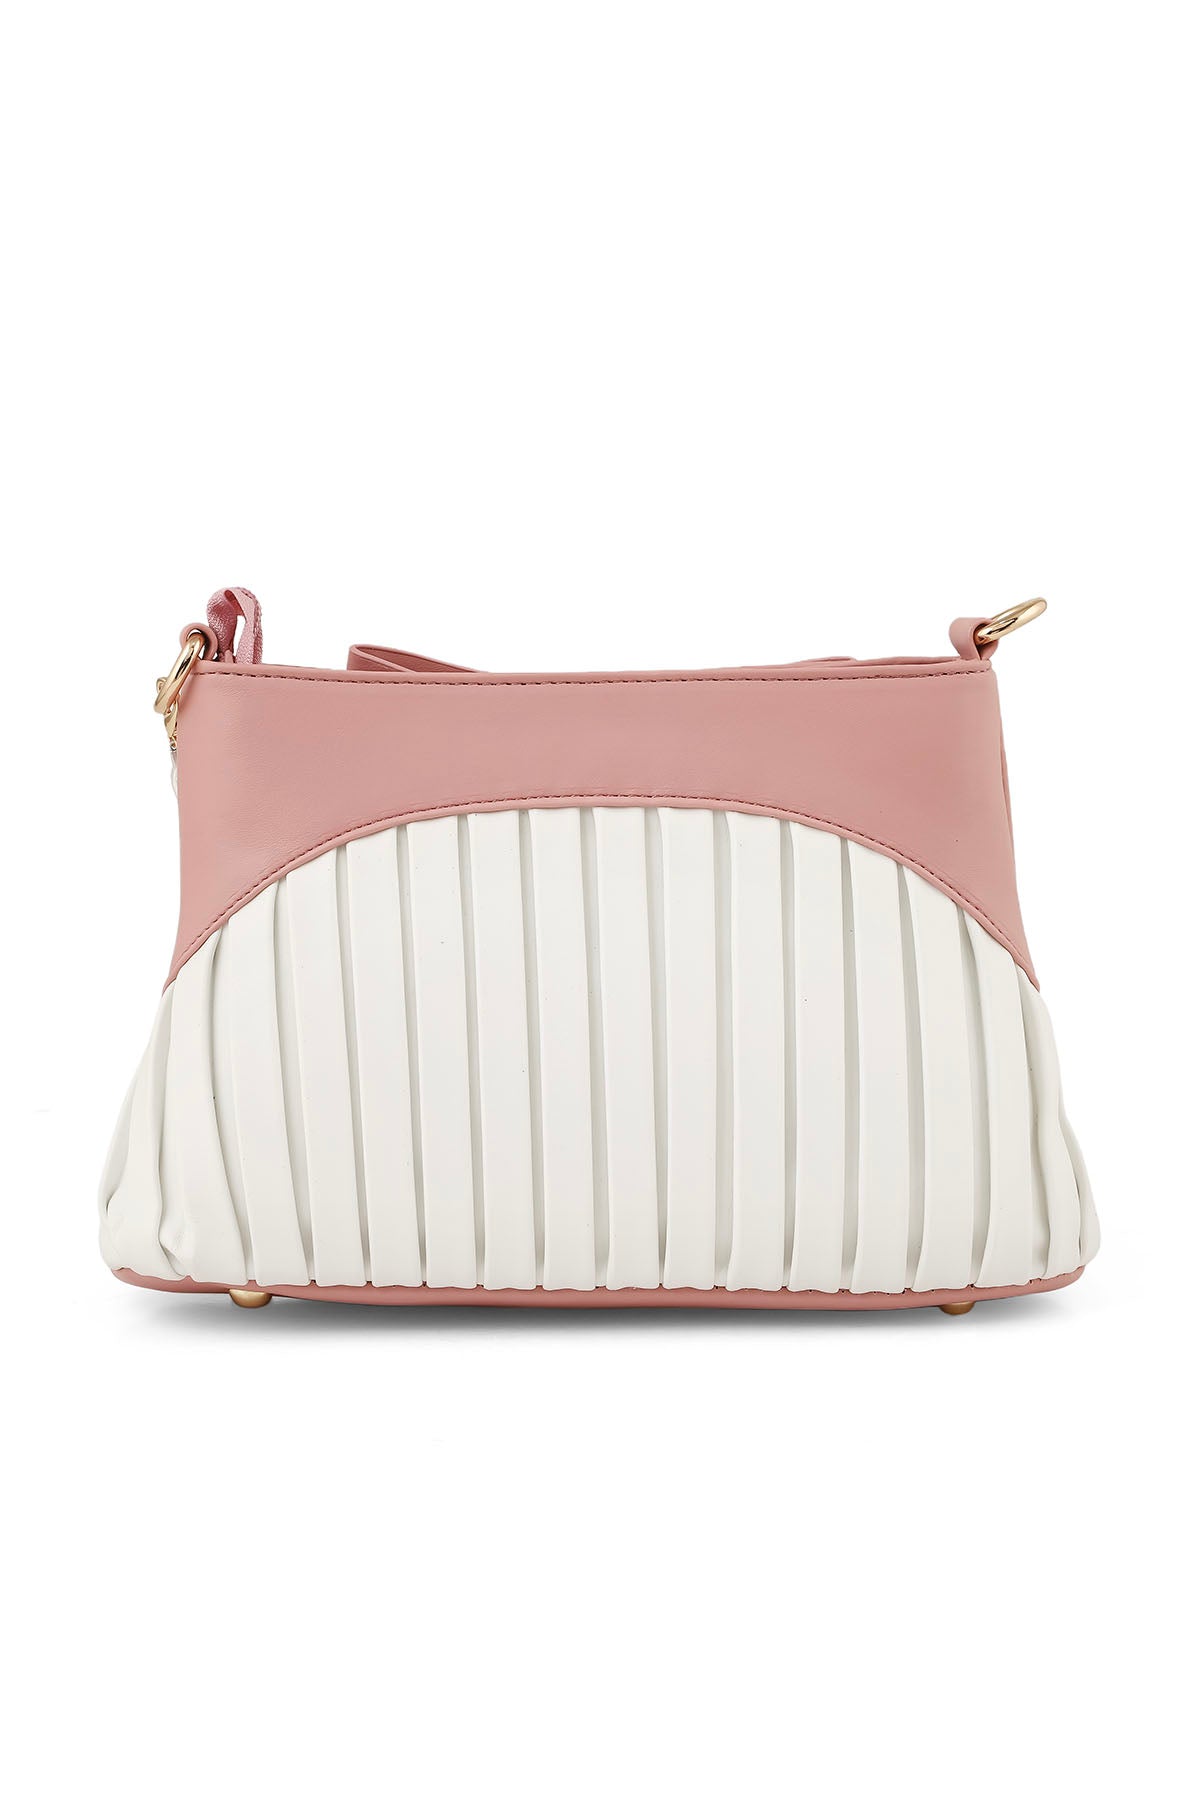 Baguette Shoulder Bags B15037-Pink